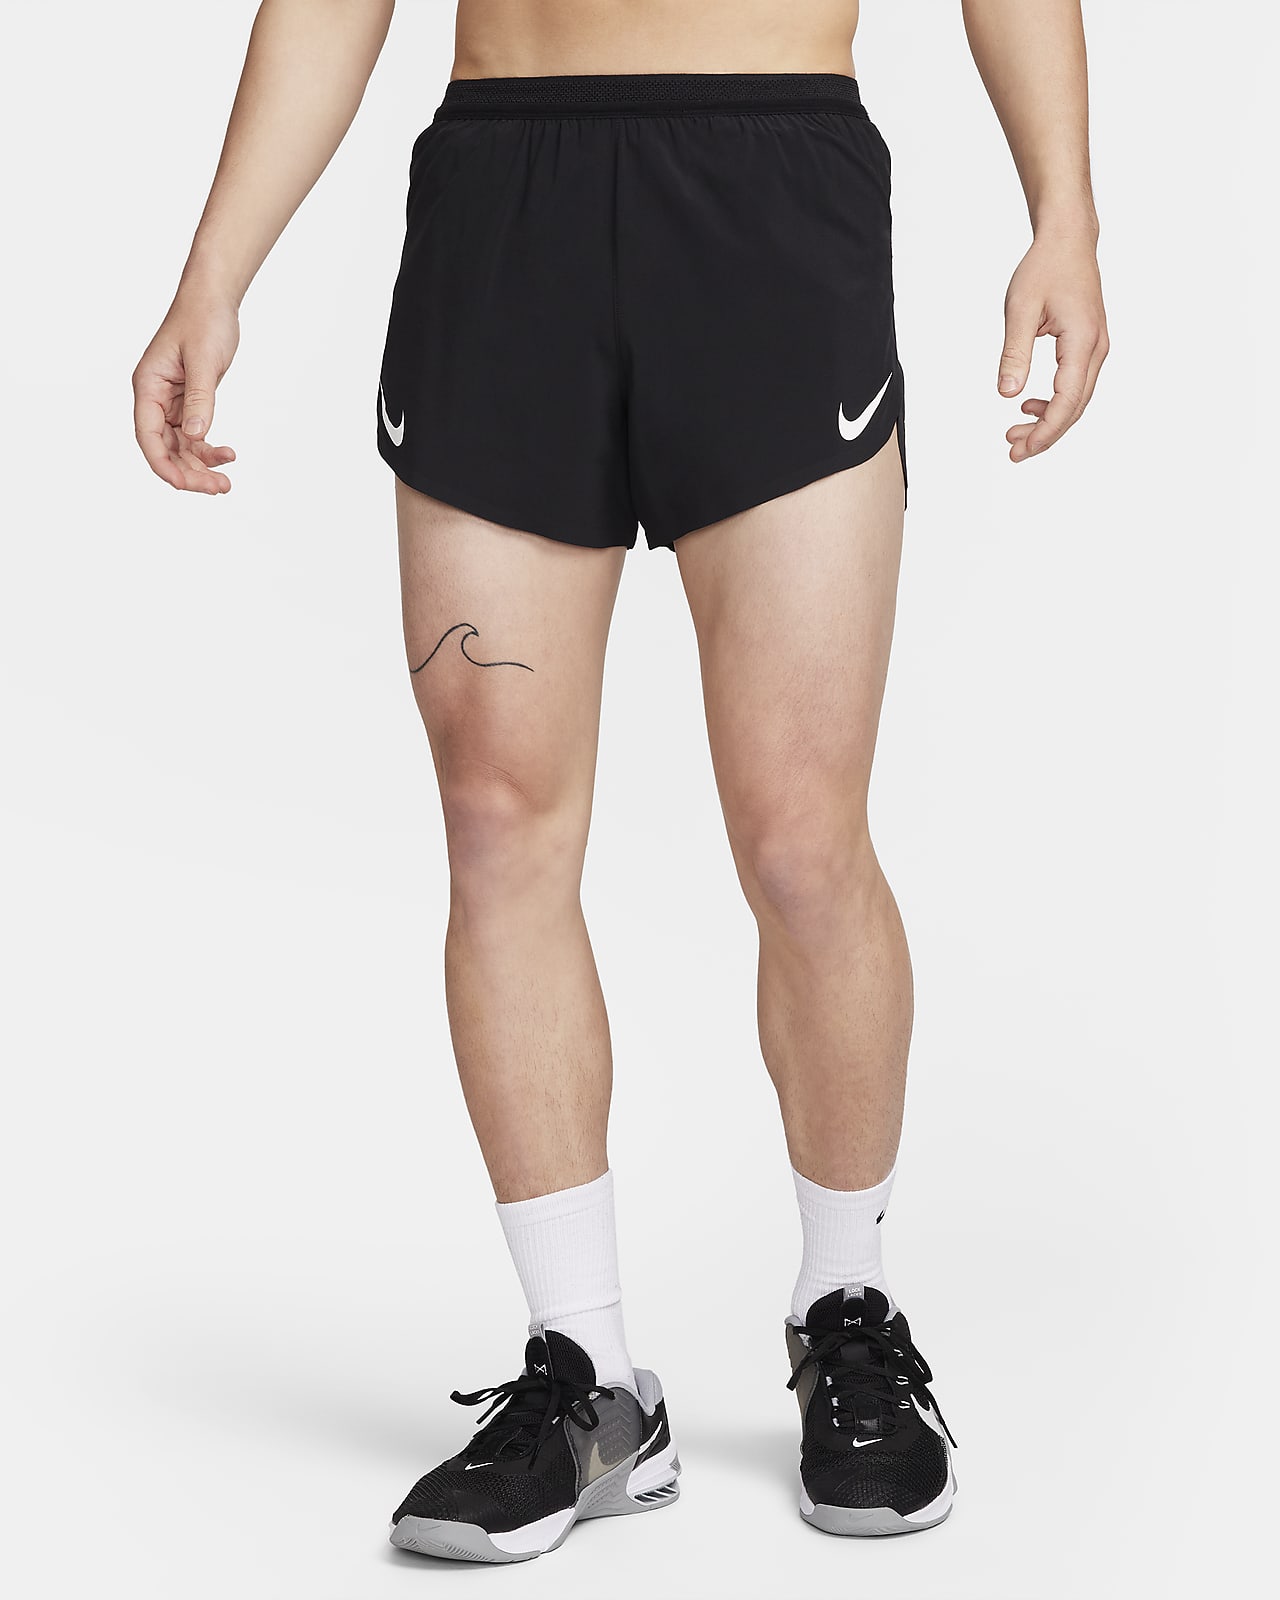 Nike Aeroswift Vapor 1 Knit Shorts Running Gym Fitness Football Holiday